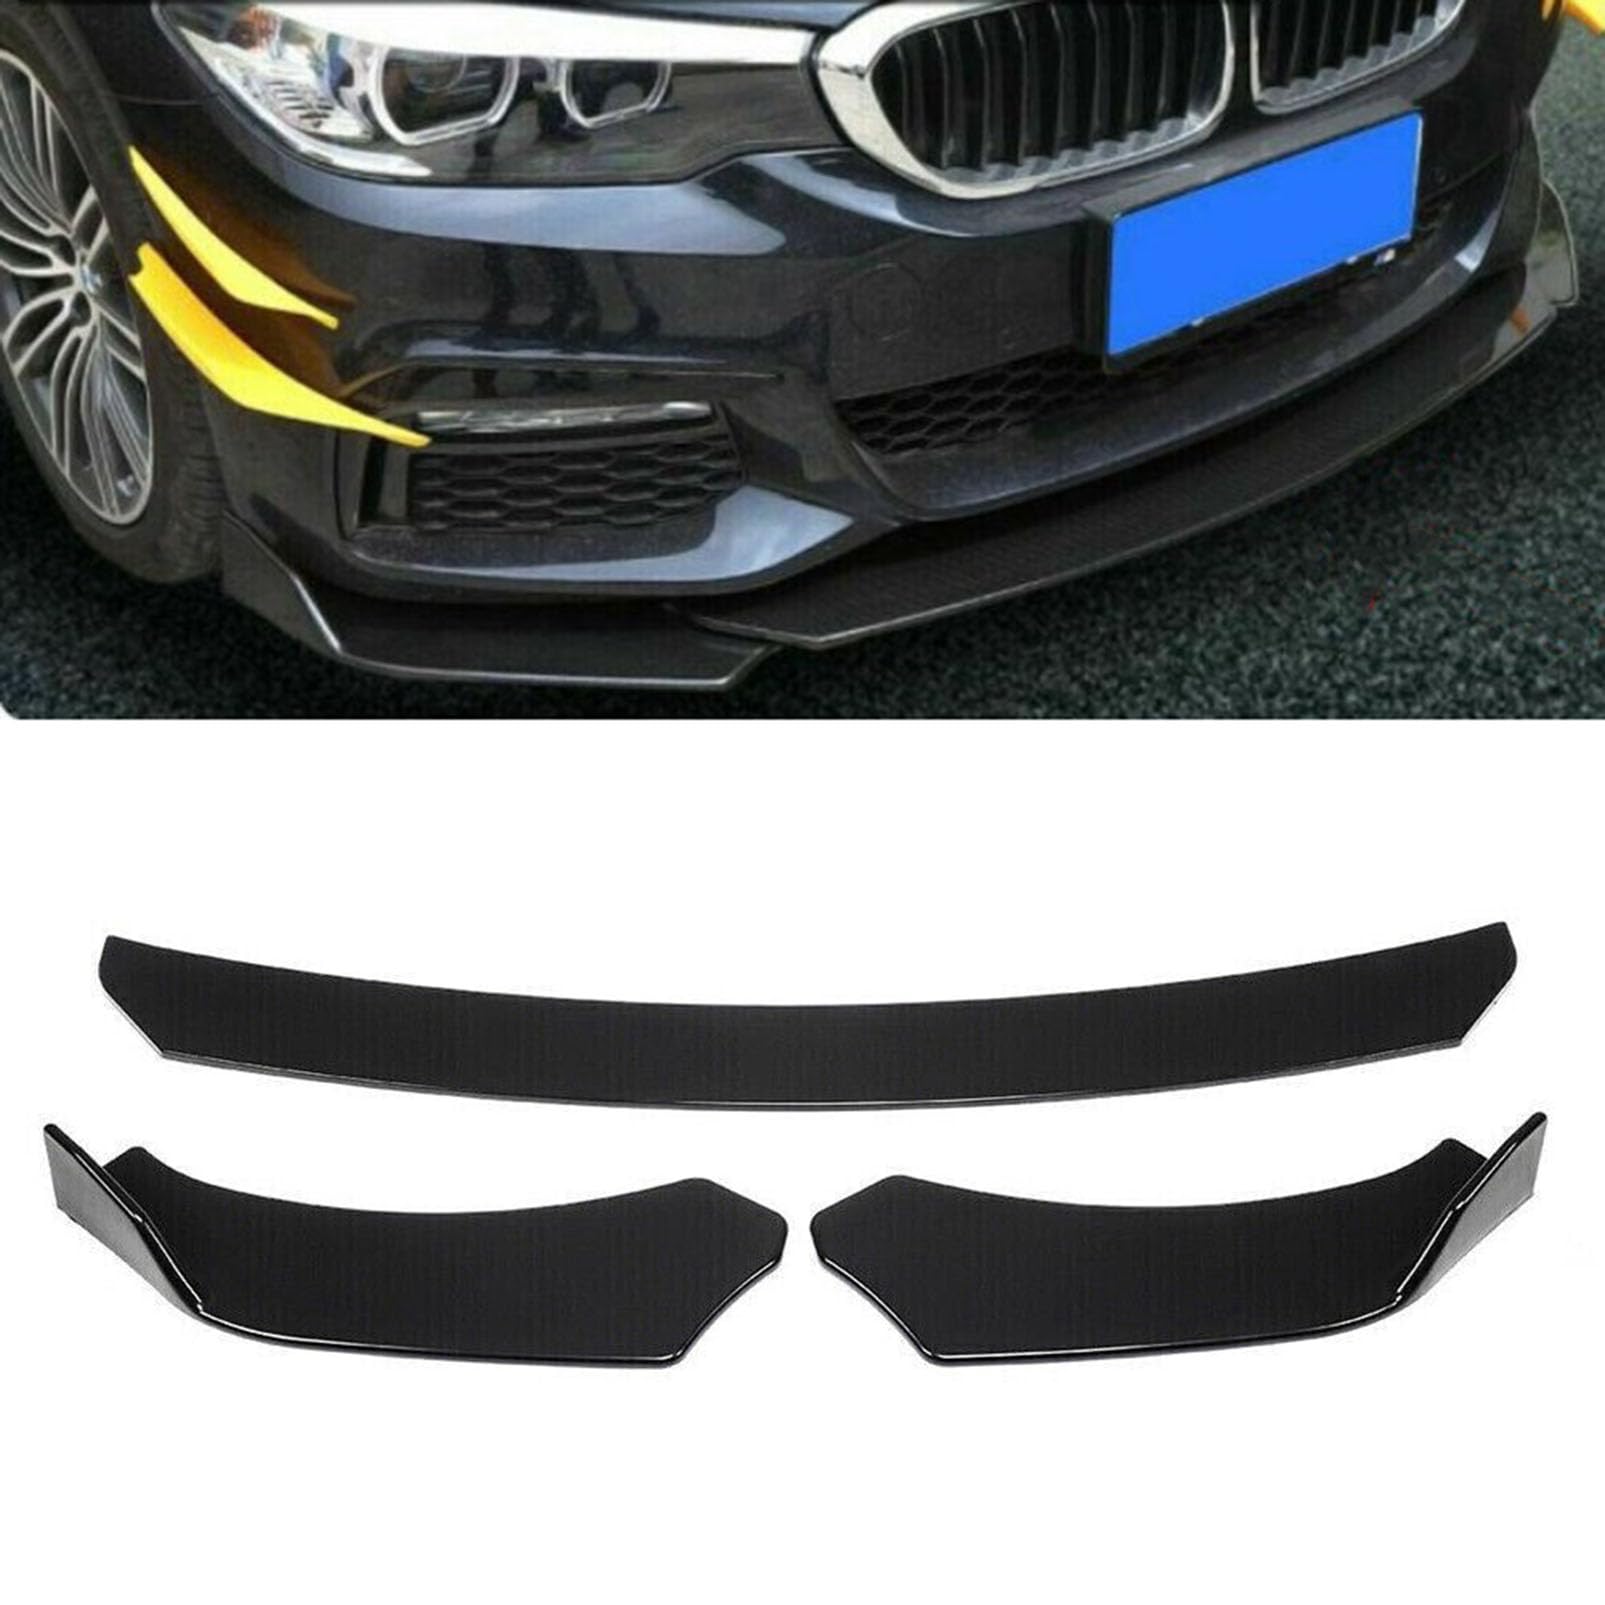 FELEA Auto-Frontstoßstangen-Lippensplitter-Spoiler für BMW X3 F25 2011-2017, langlebiger Auto-Splitter-Diffusor-Schutz von FELEA